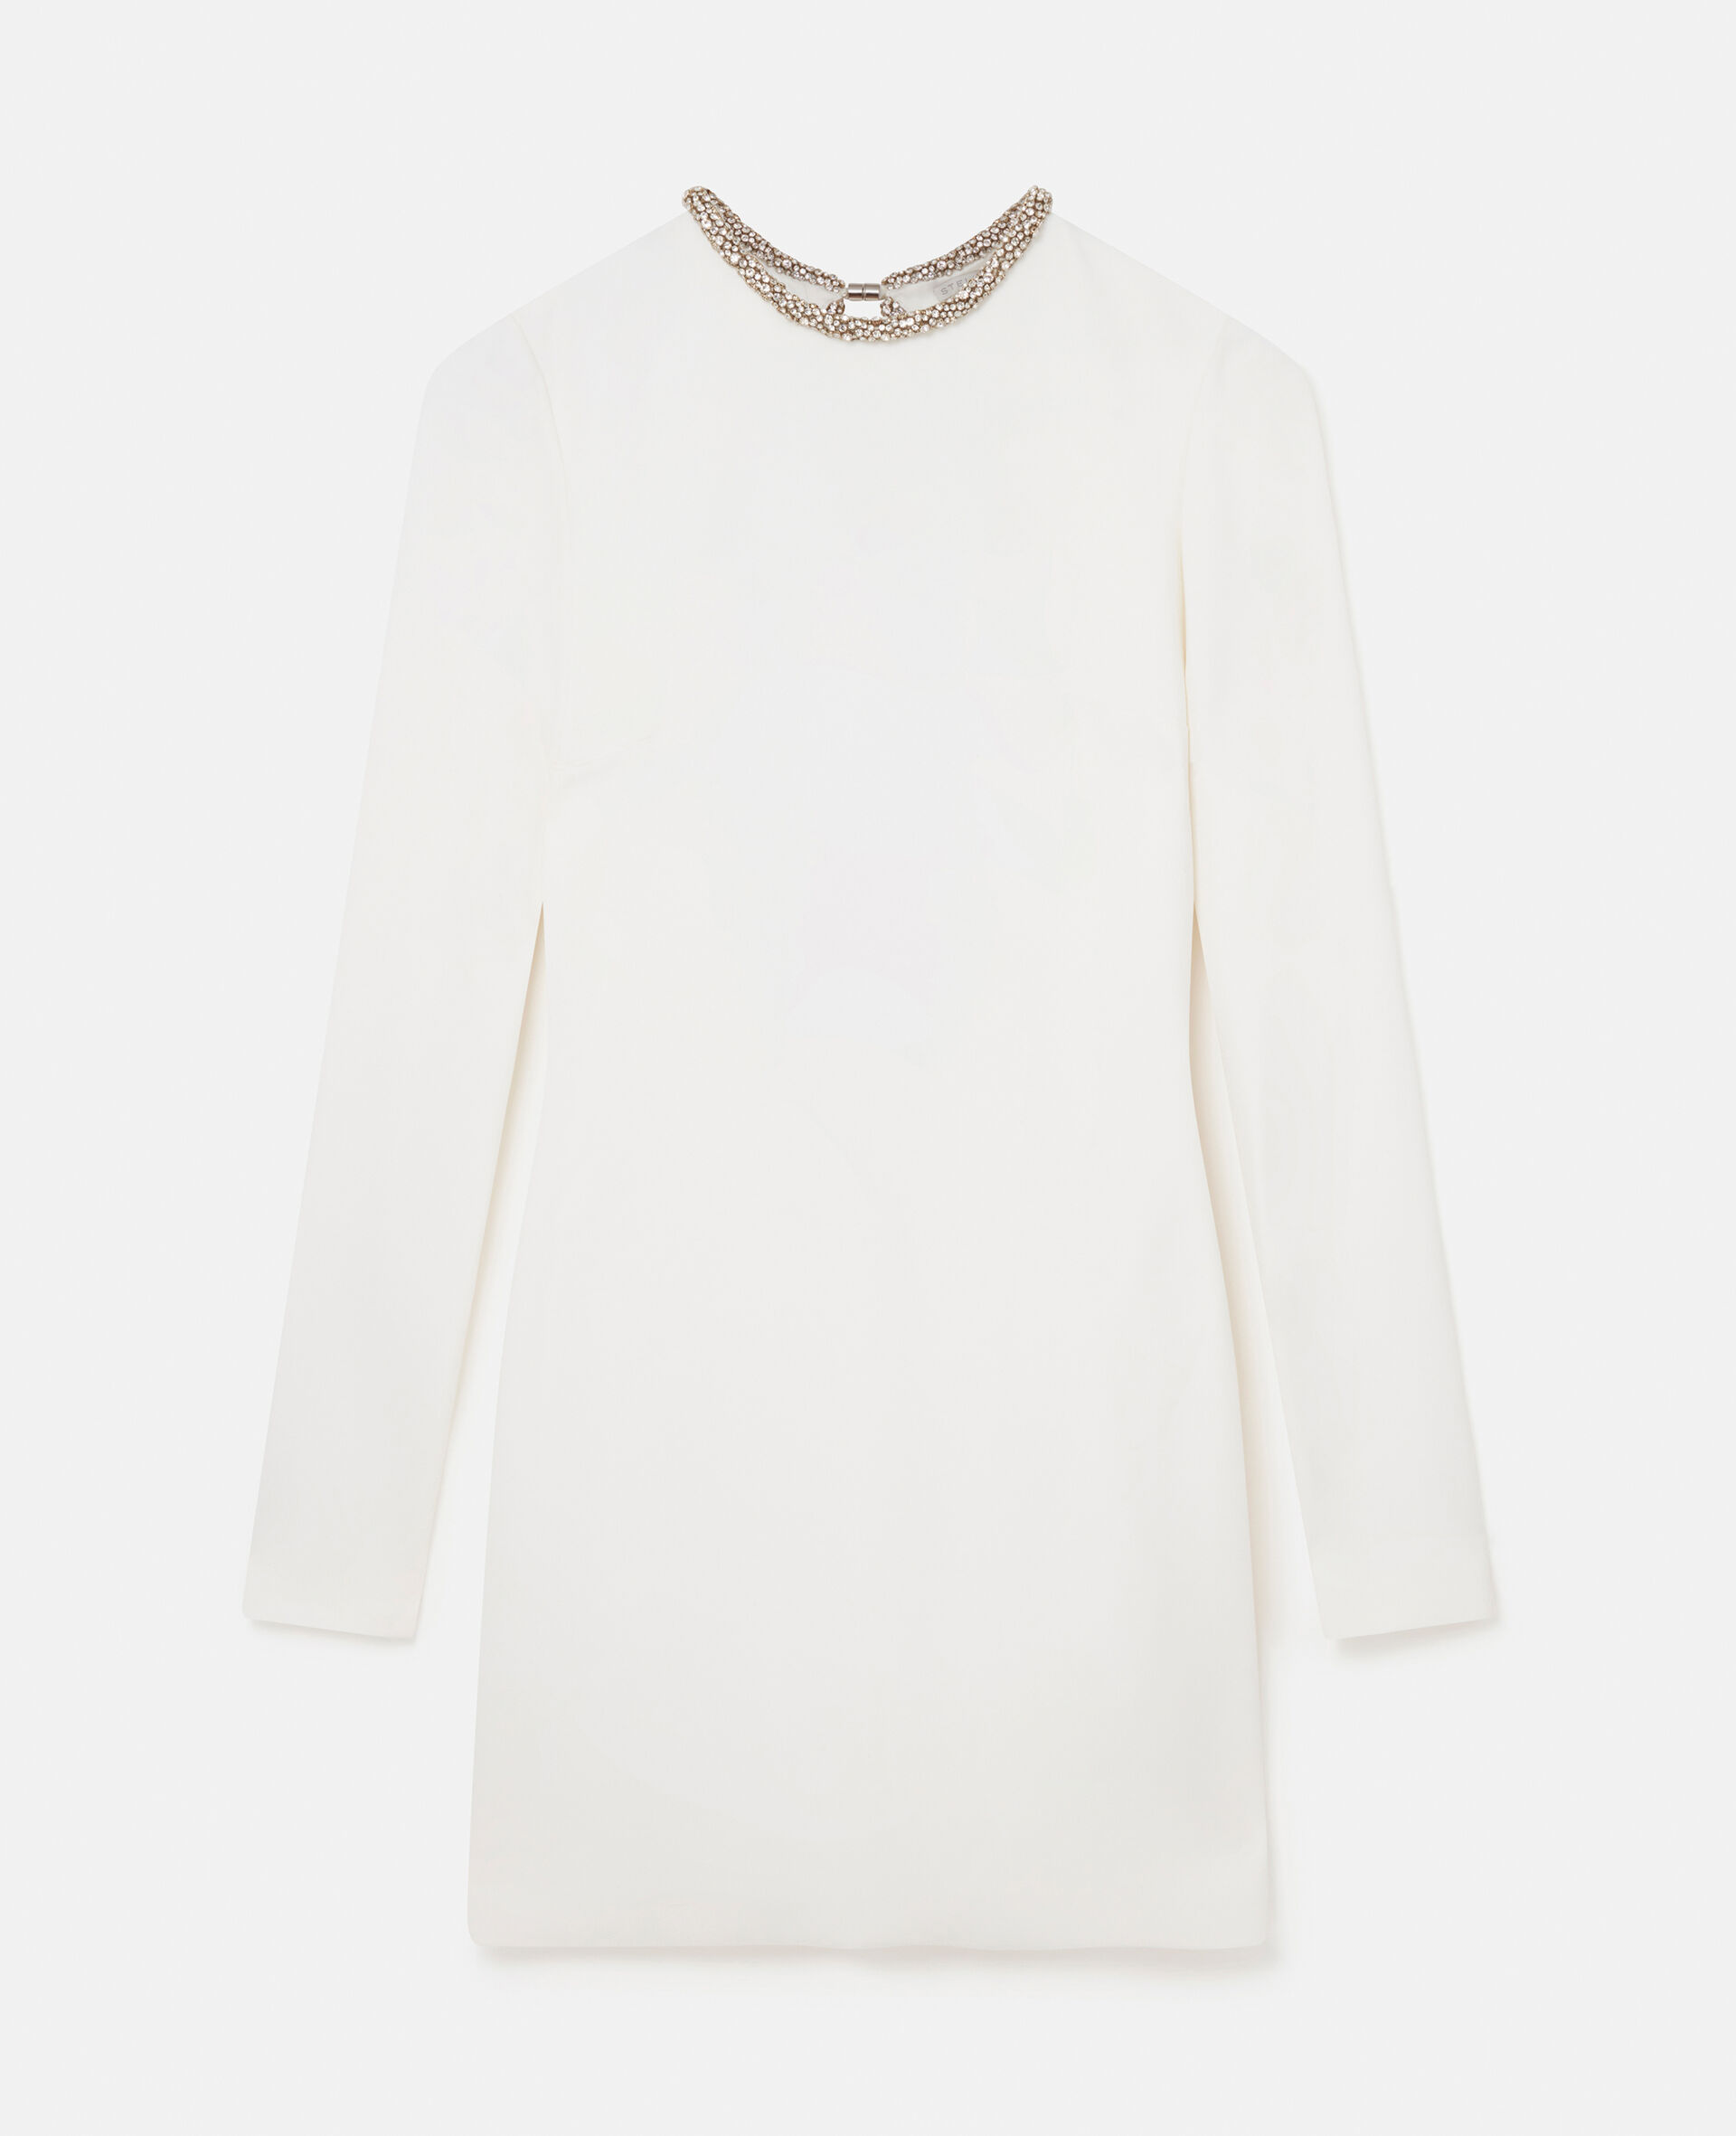 Crystal Collar Cocktail Mini Dress-White-large image number 0